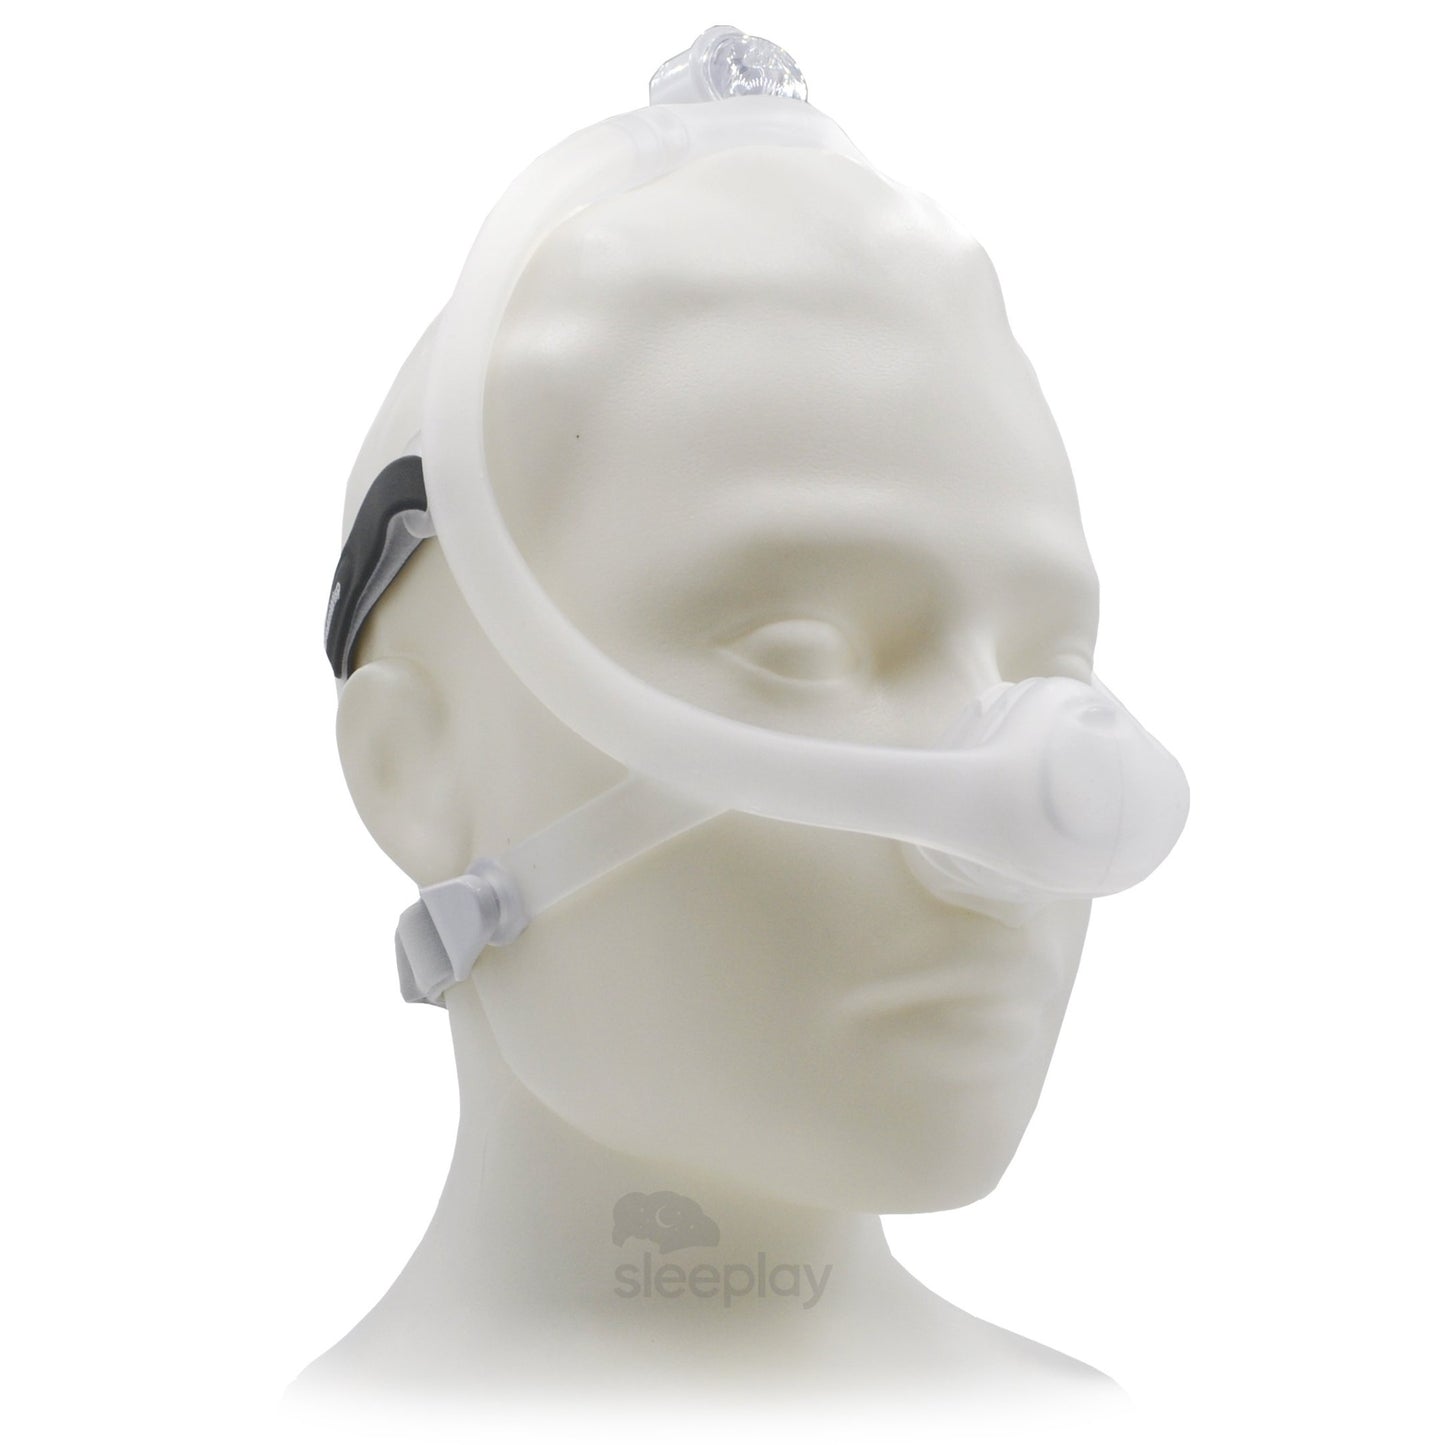 DreamWear Nasal CPAP Mask with Headgear.